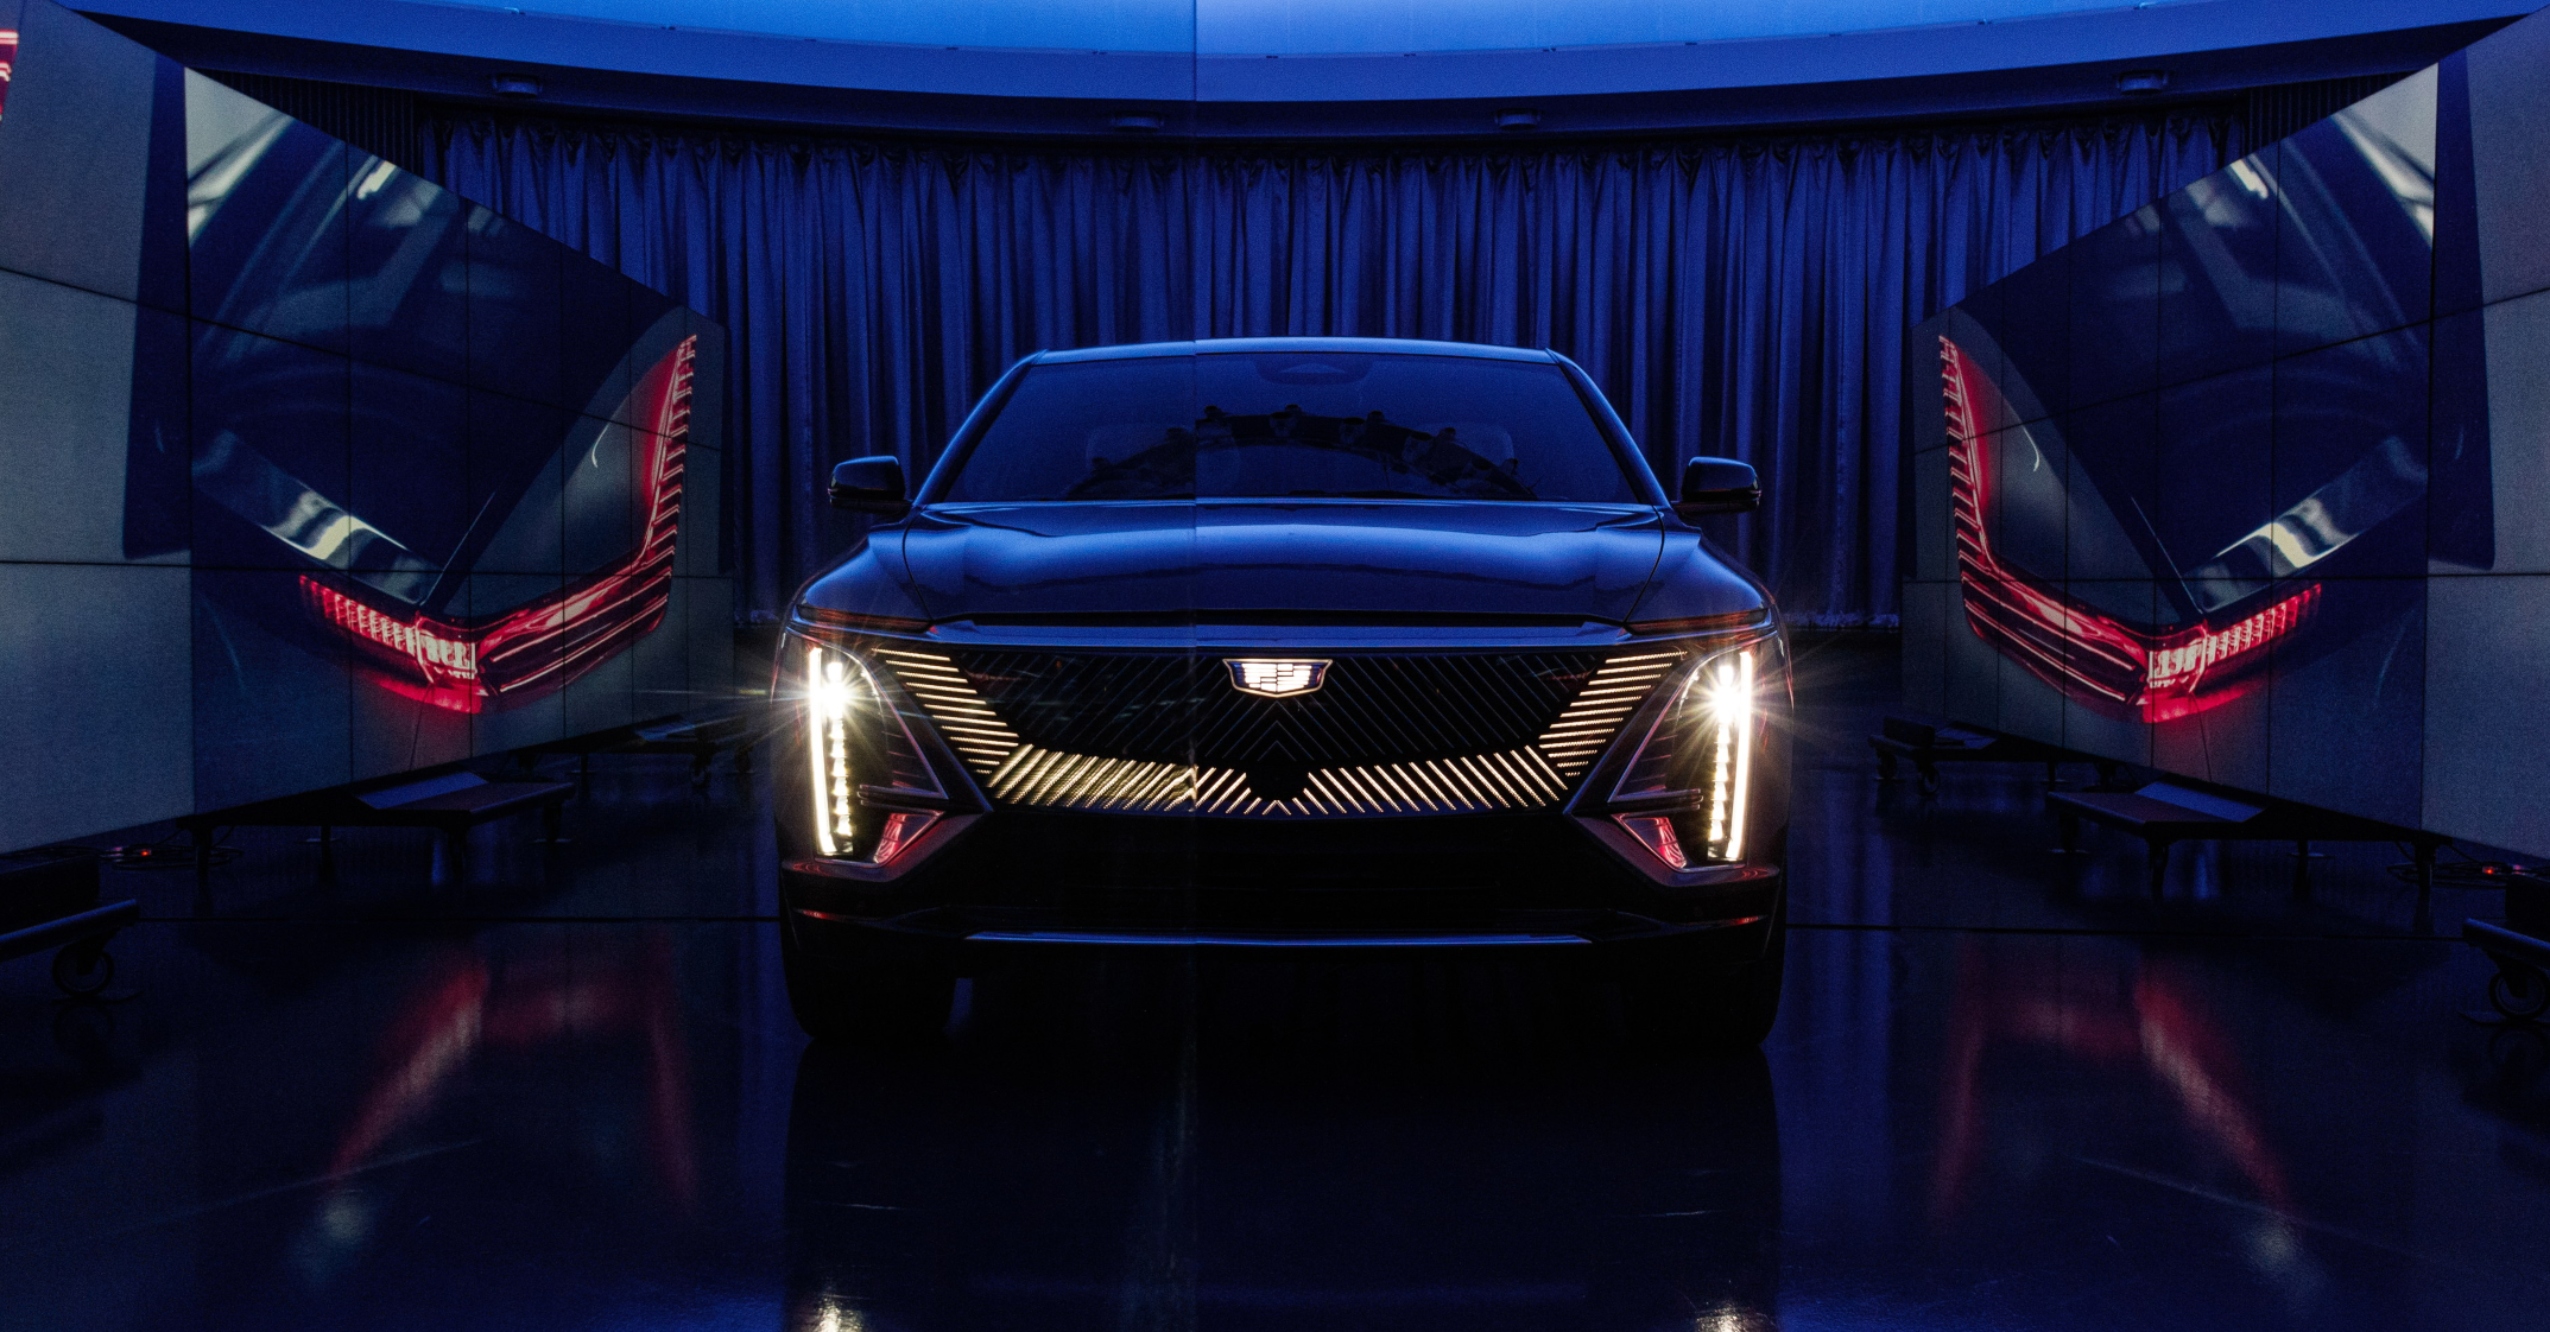 Electric Cadillac Escalade SUV Rendering Borrows Lyriq Design Motifs -  autoevolution